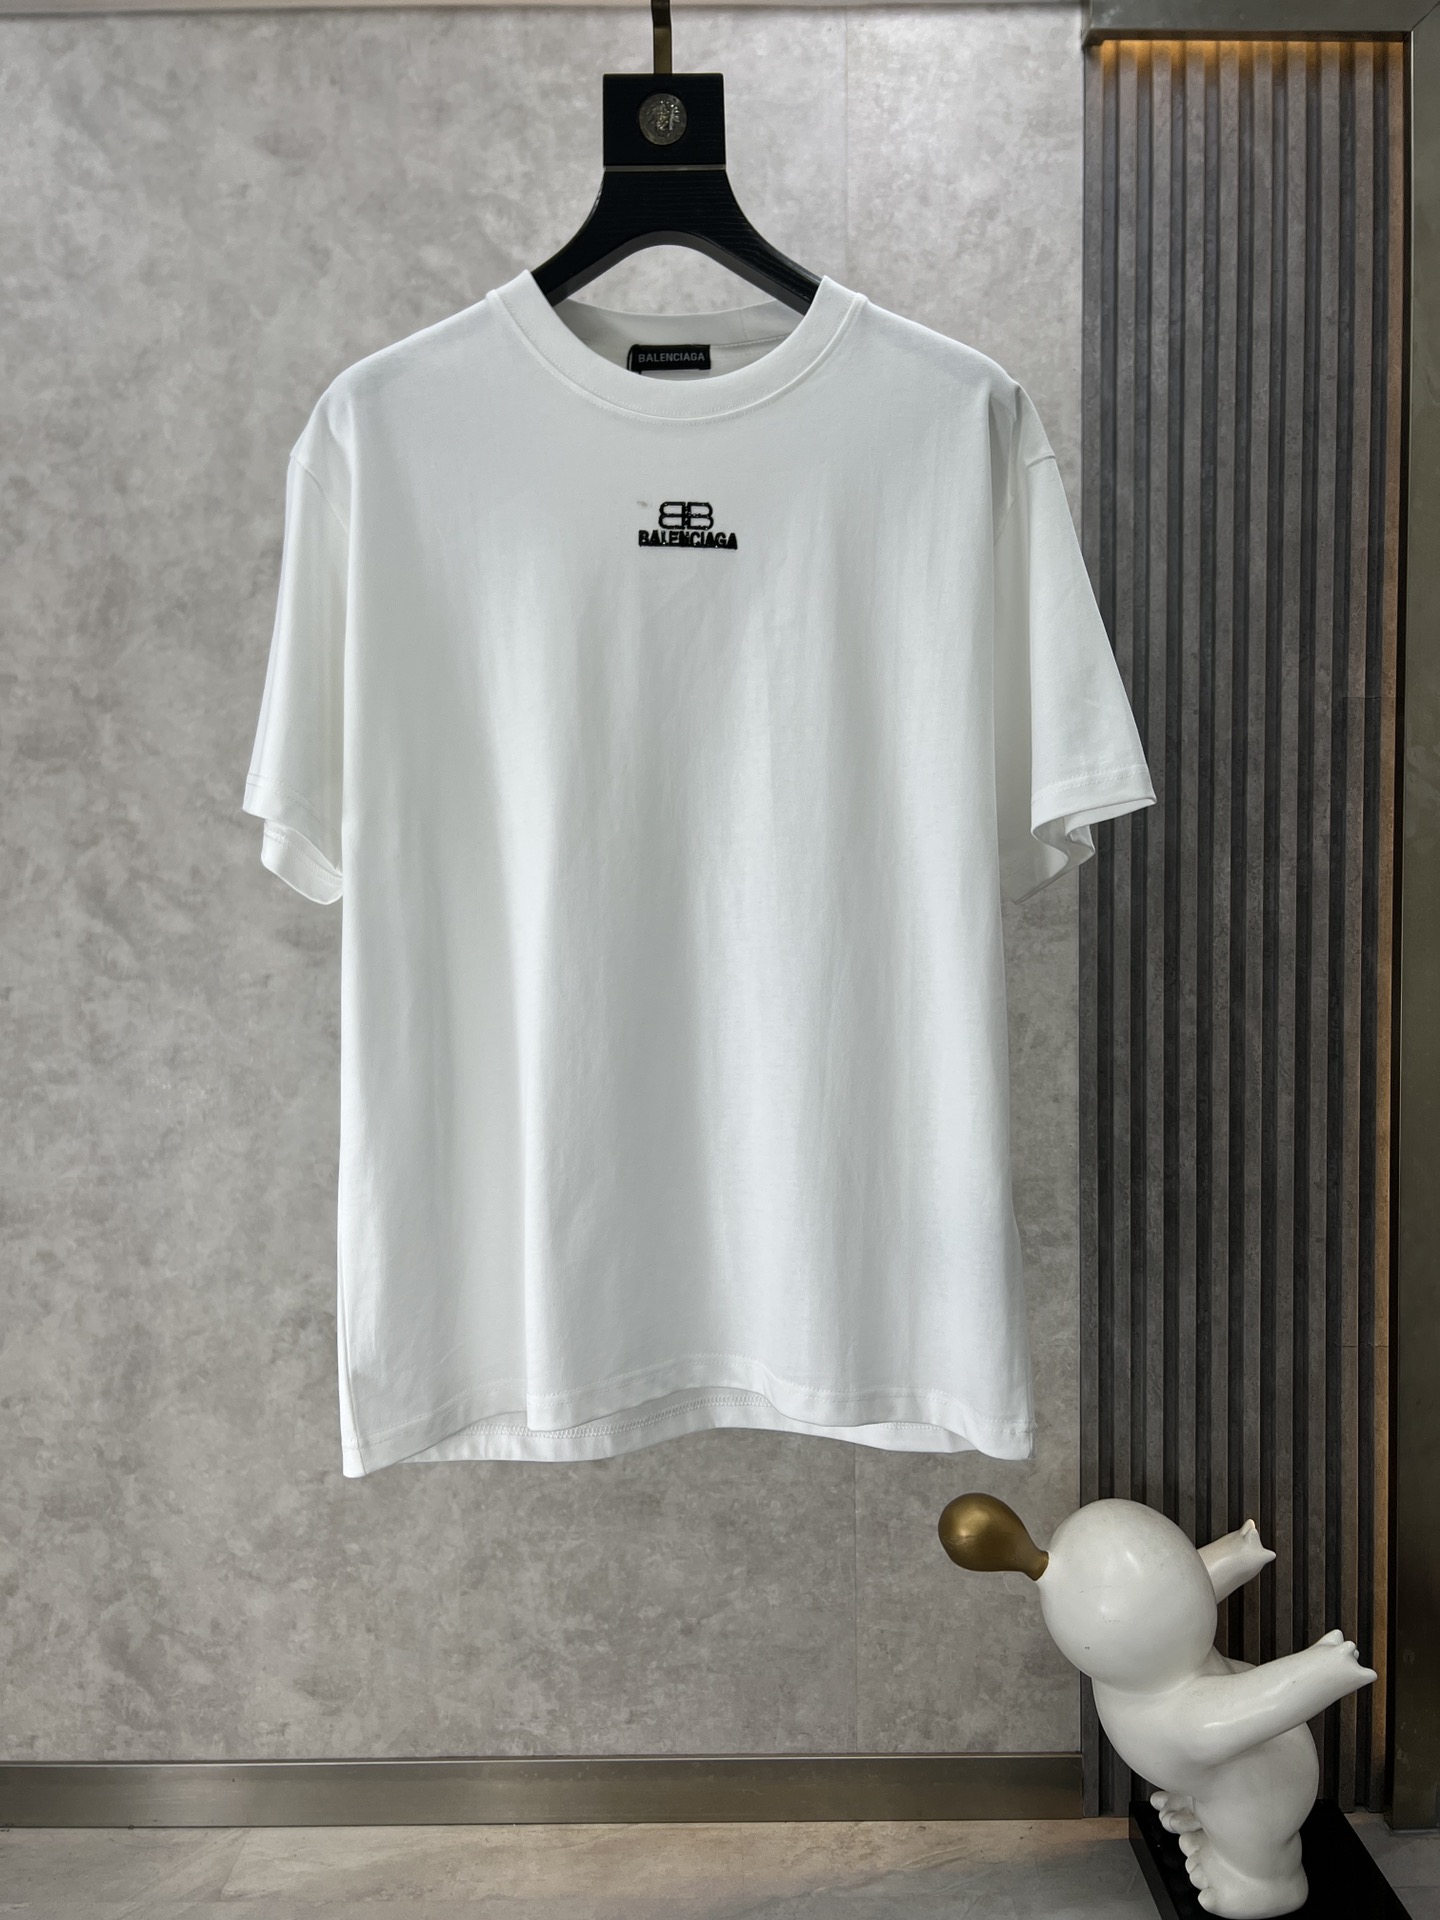 Balenciaga Replicas
 Clothing T-Shirt Black White Unisex Cotton Spring/Summer Collection Fashion Short Sleeve